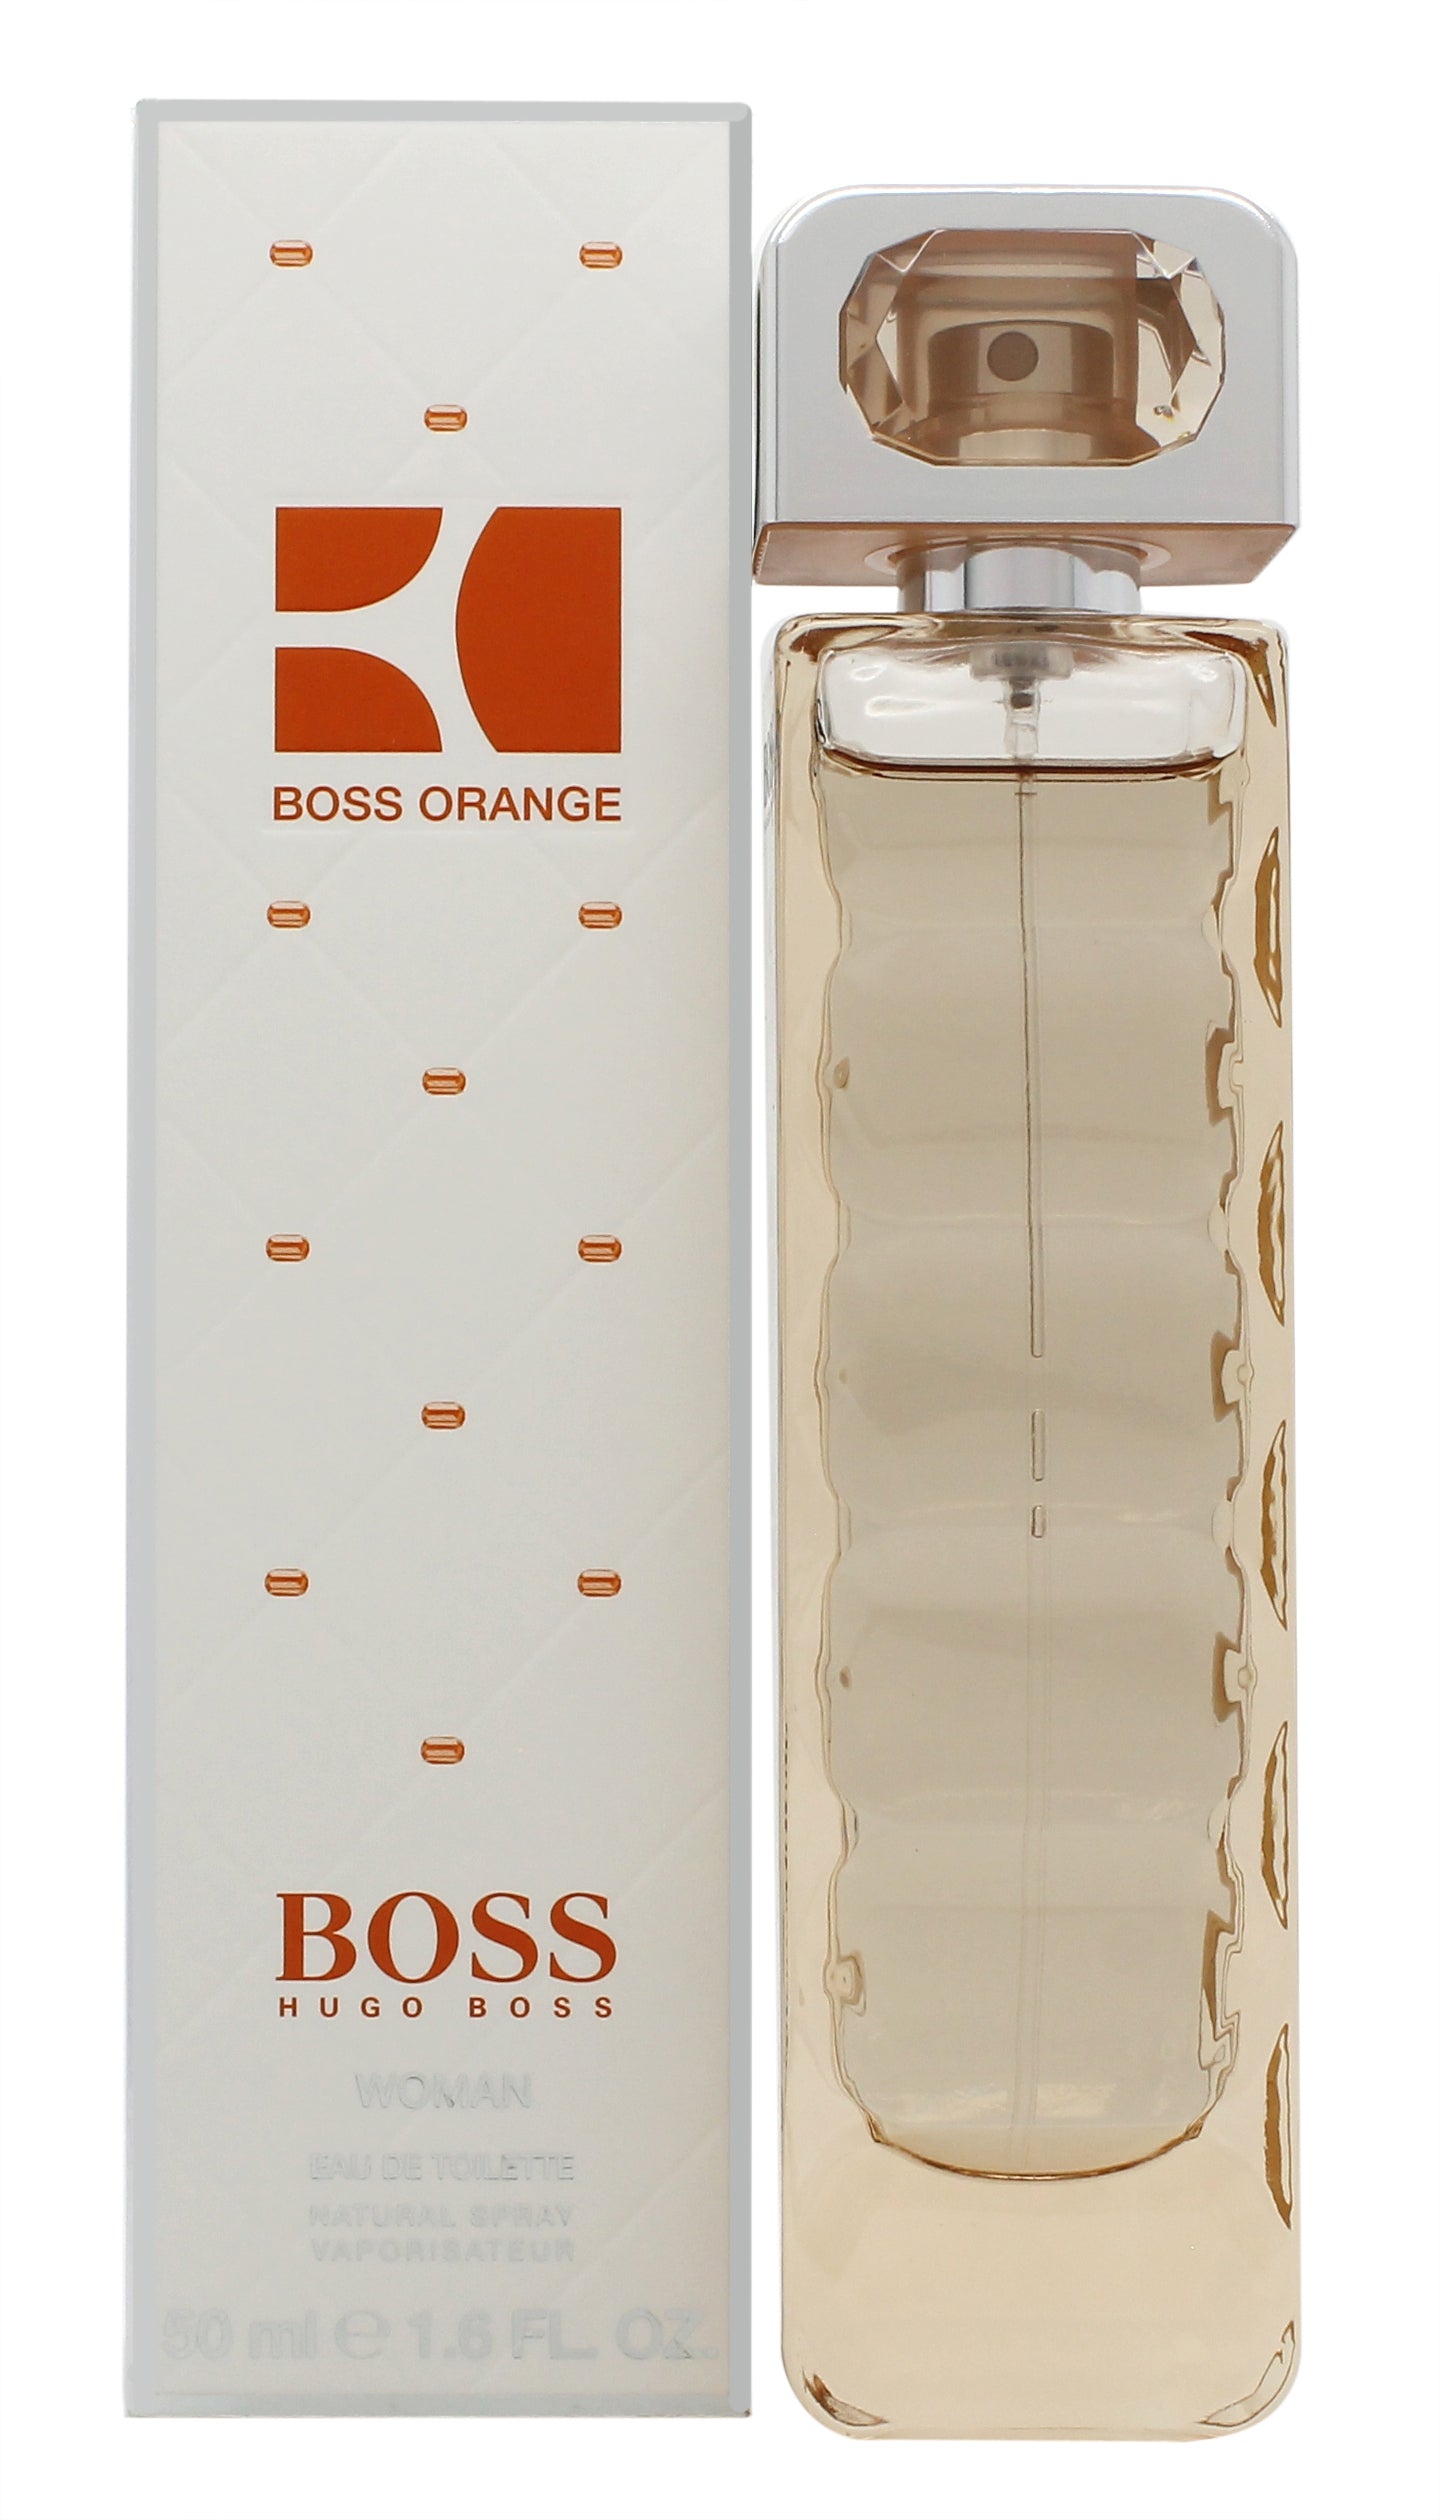 View Hugo Boss Orange Eau de Toilette 50ml Spray information